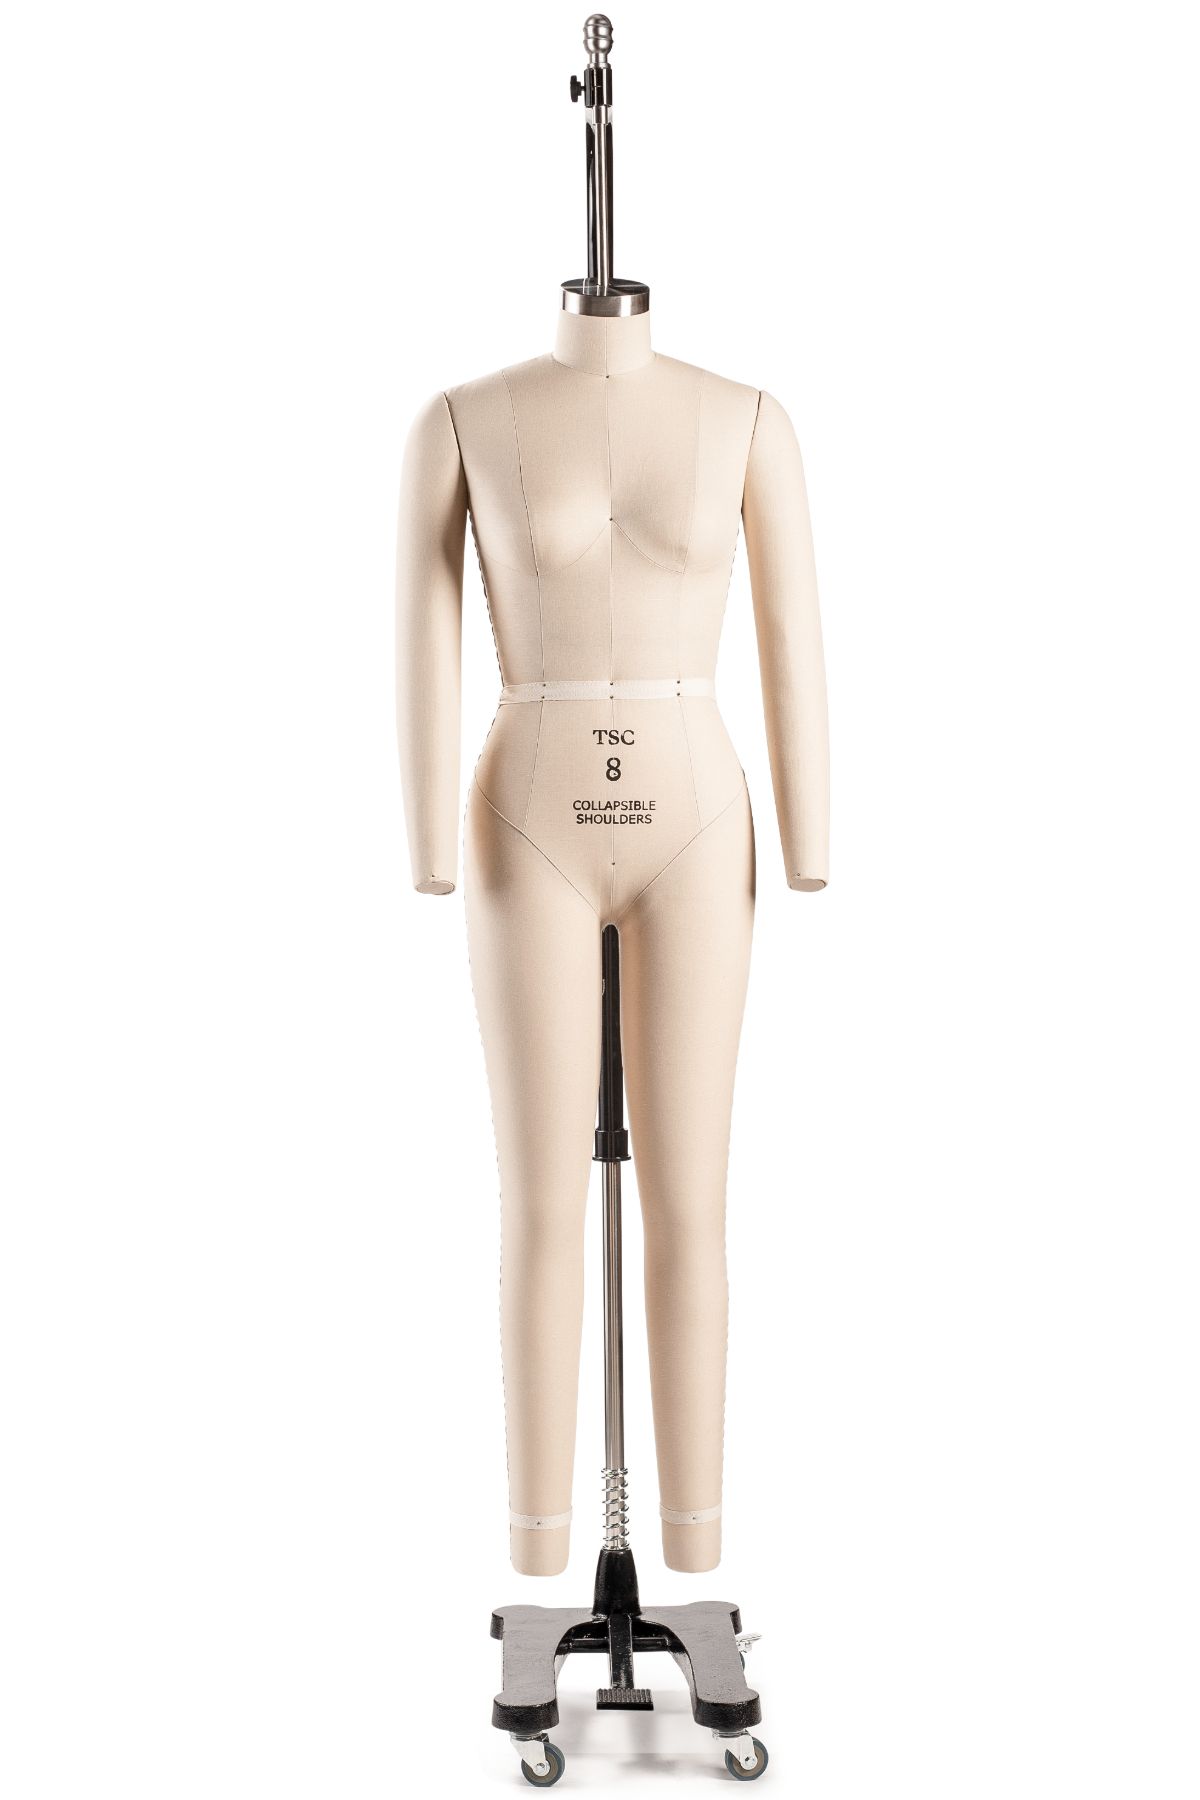 Female Mannequin Full Body Dress Form Sewing Dress Model